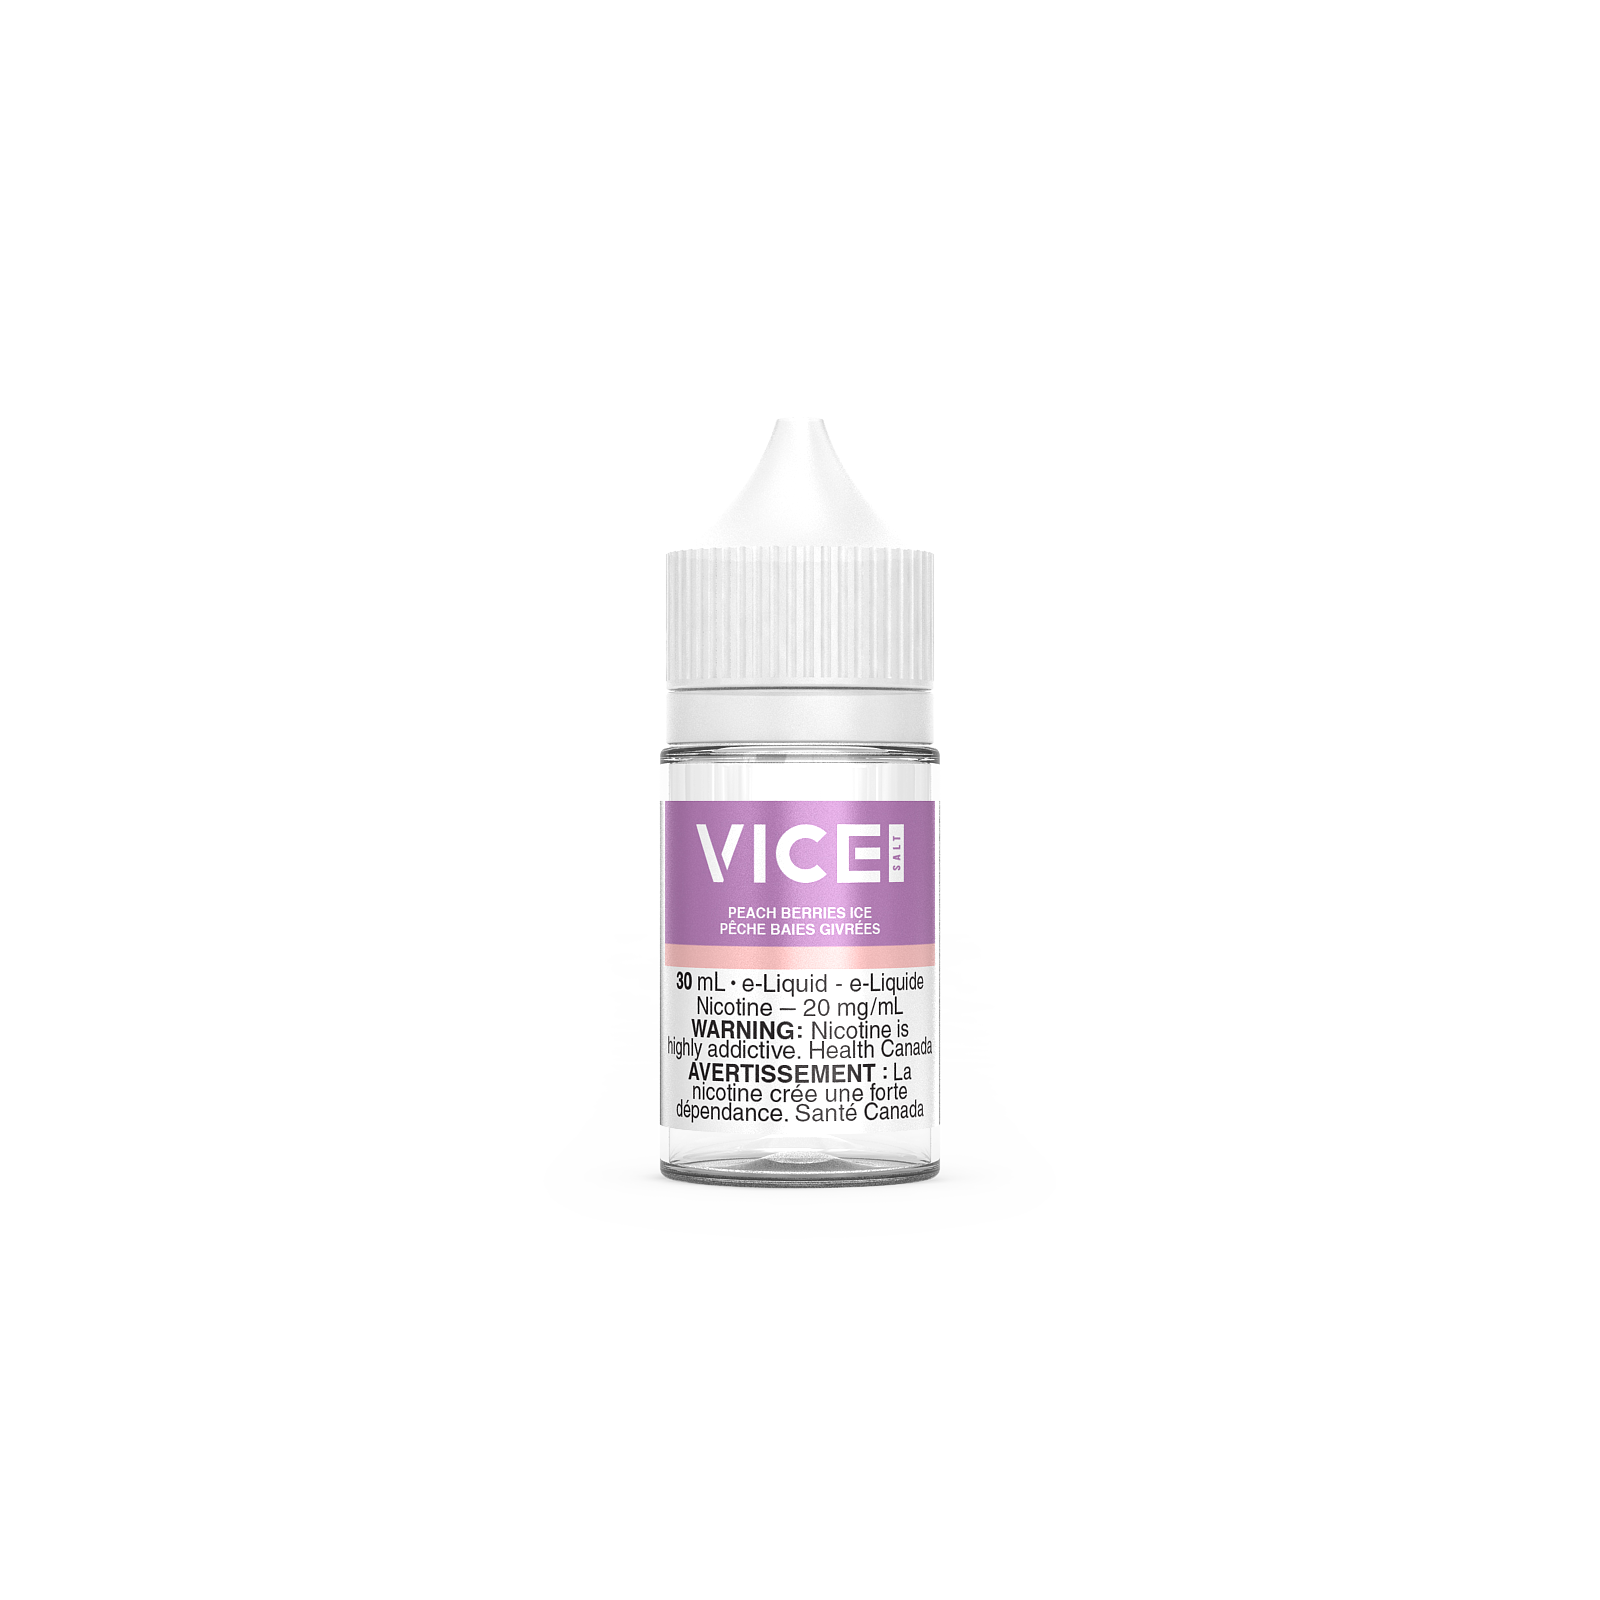 Vice Salt - PEACH BERRIES ICE